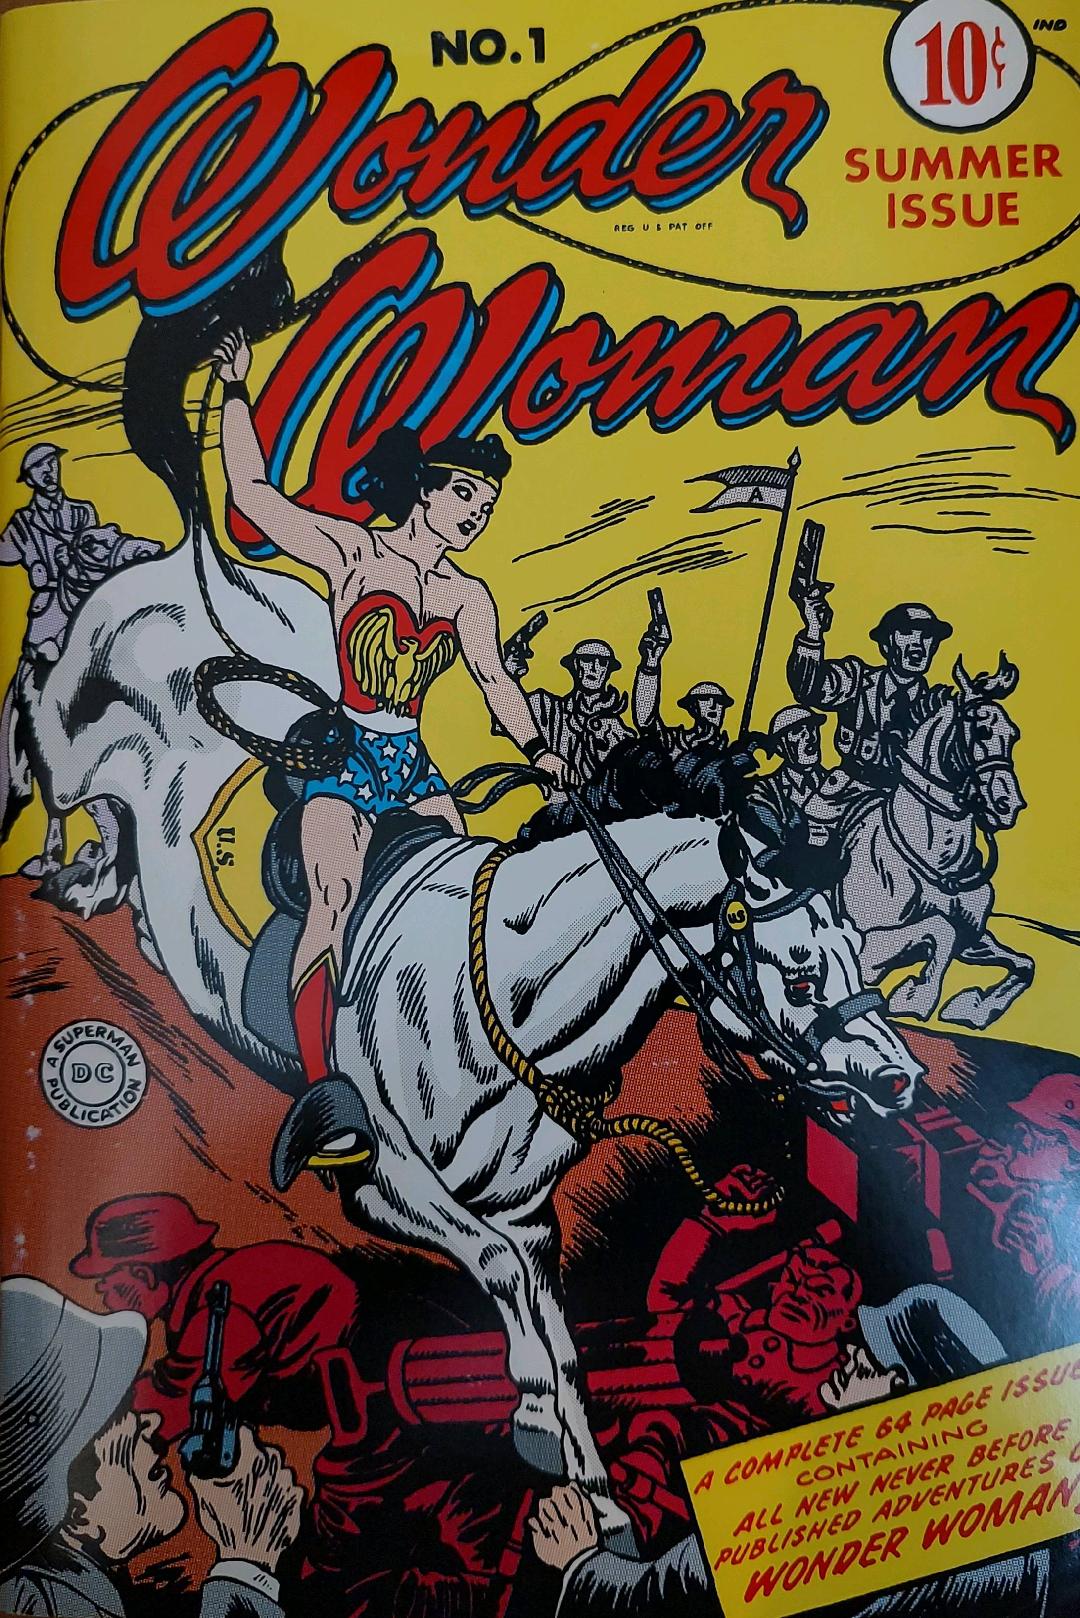 Wonder Woman #1 Reprint.  Year 2001.  Collectible.